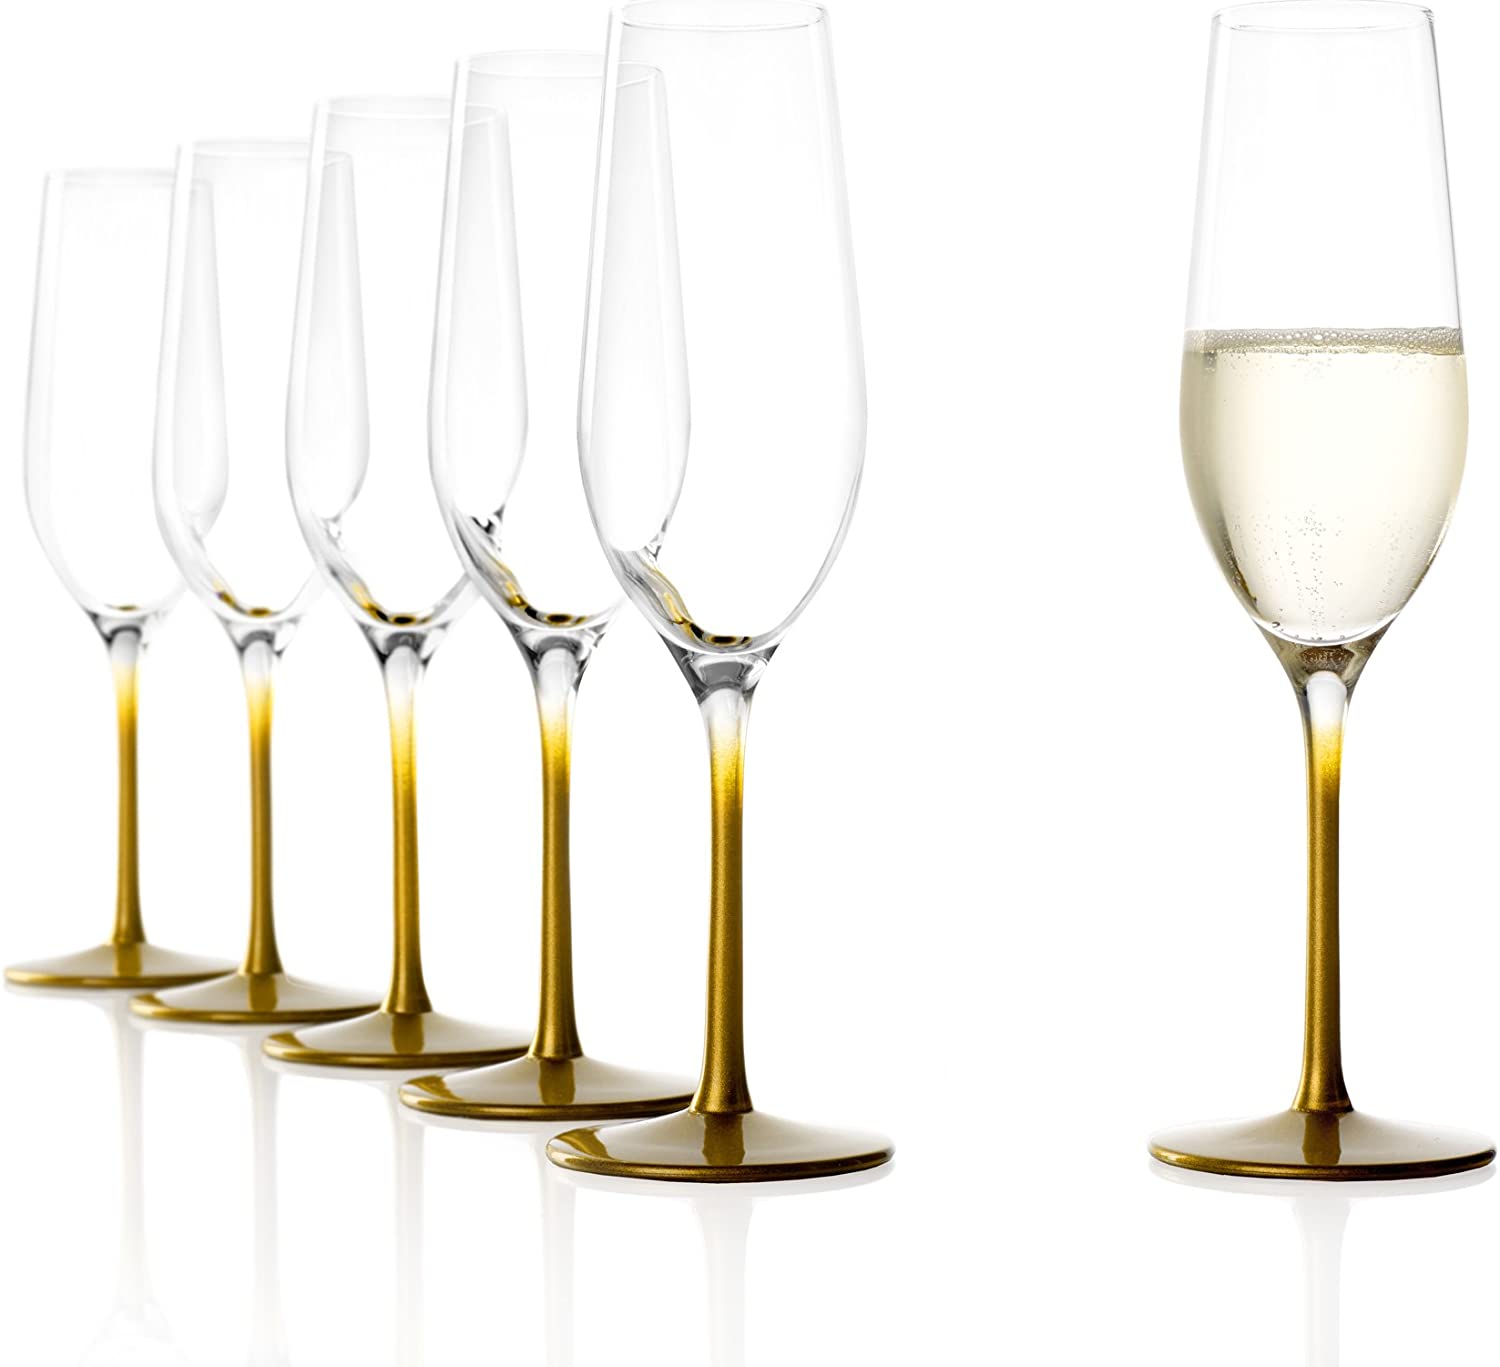 STÖLZLE LAUSITZ Event Champagne Glasses 195 ml in Gold I Set of 6 Crystal Glass I Champagne Flutes Dishwasher Safe I Champagne Flutes Pack of 6 Shatterproof I Like Mouth-Blown I Highest Quality